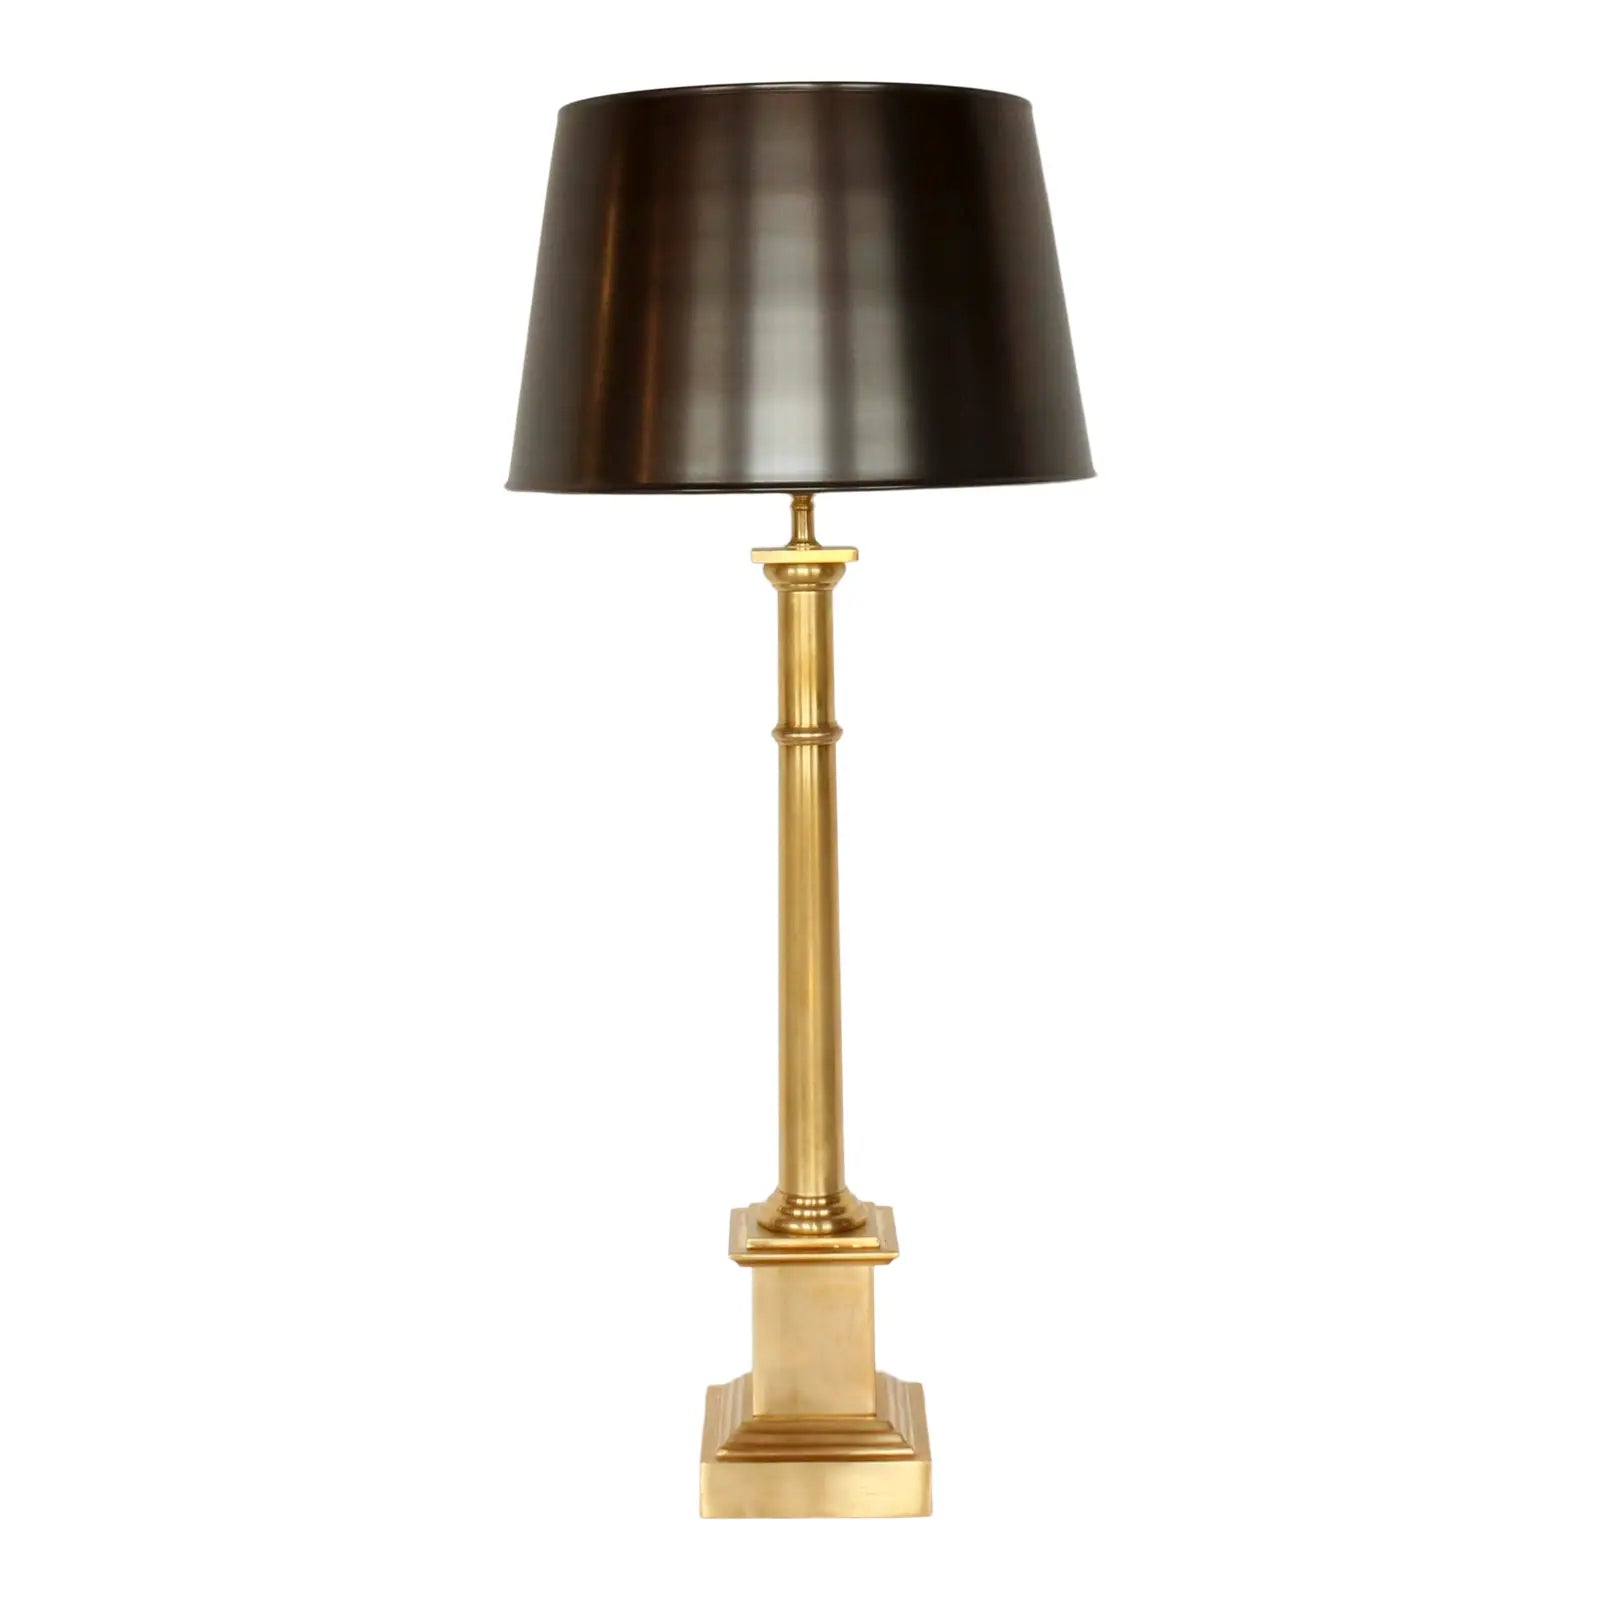 Antique Solid Brass Floor Lamp - Foter